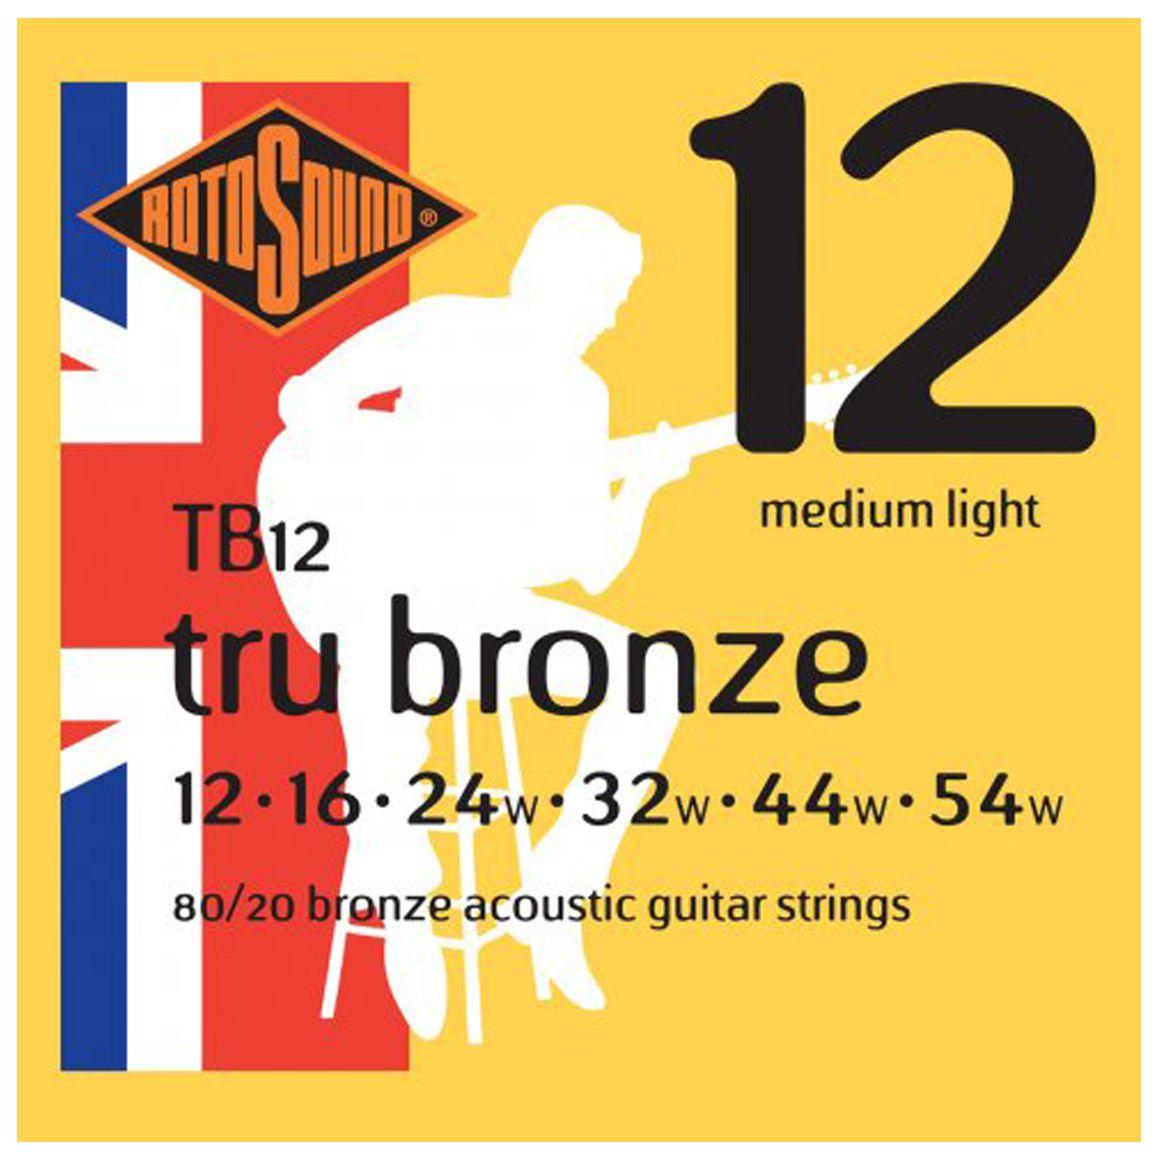 Bronze Yamaha Logo - TB12 Bronze 80 20 Bronze Acoustic Guitar Strings 12 54